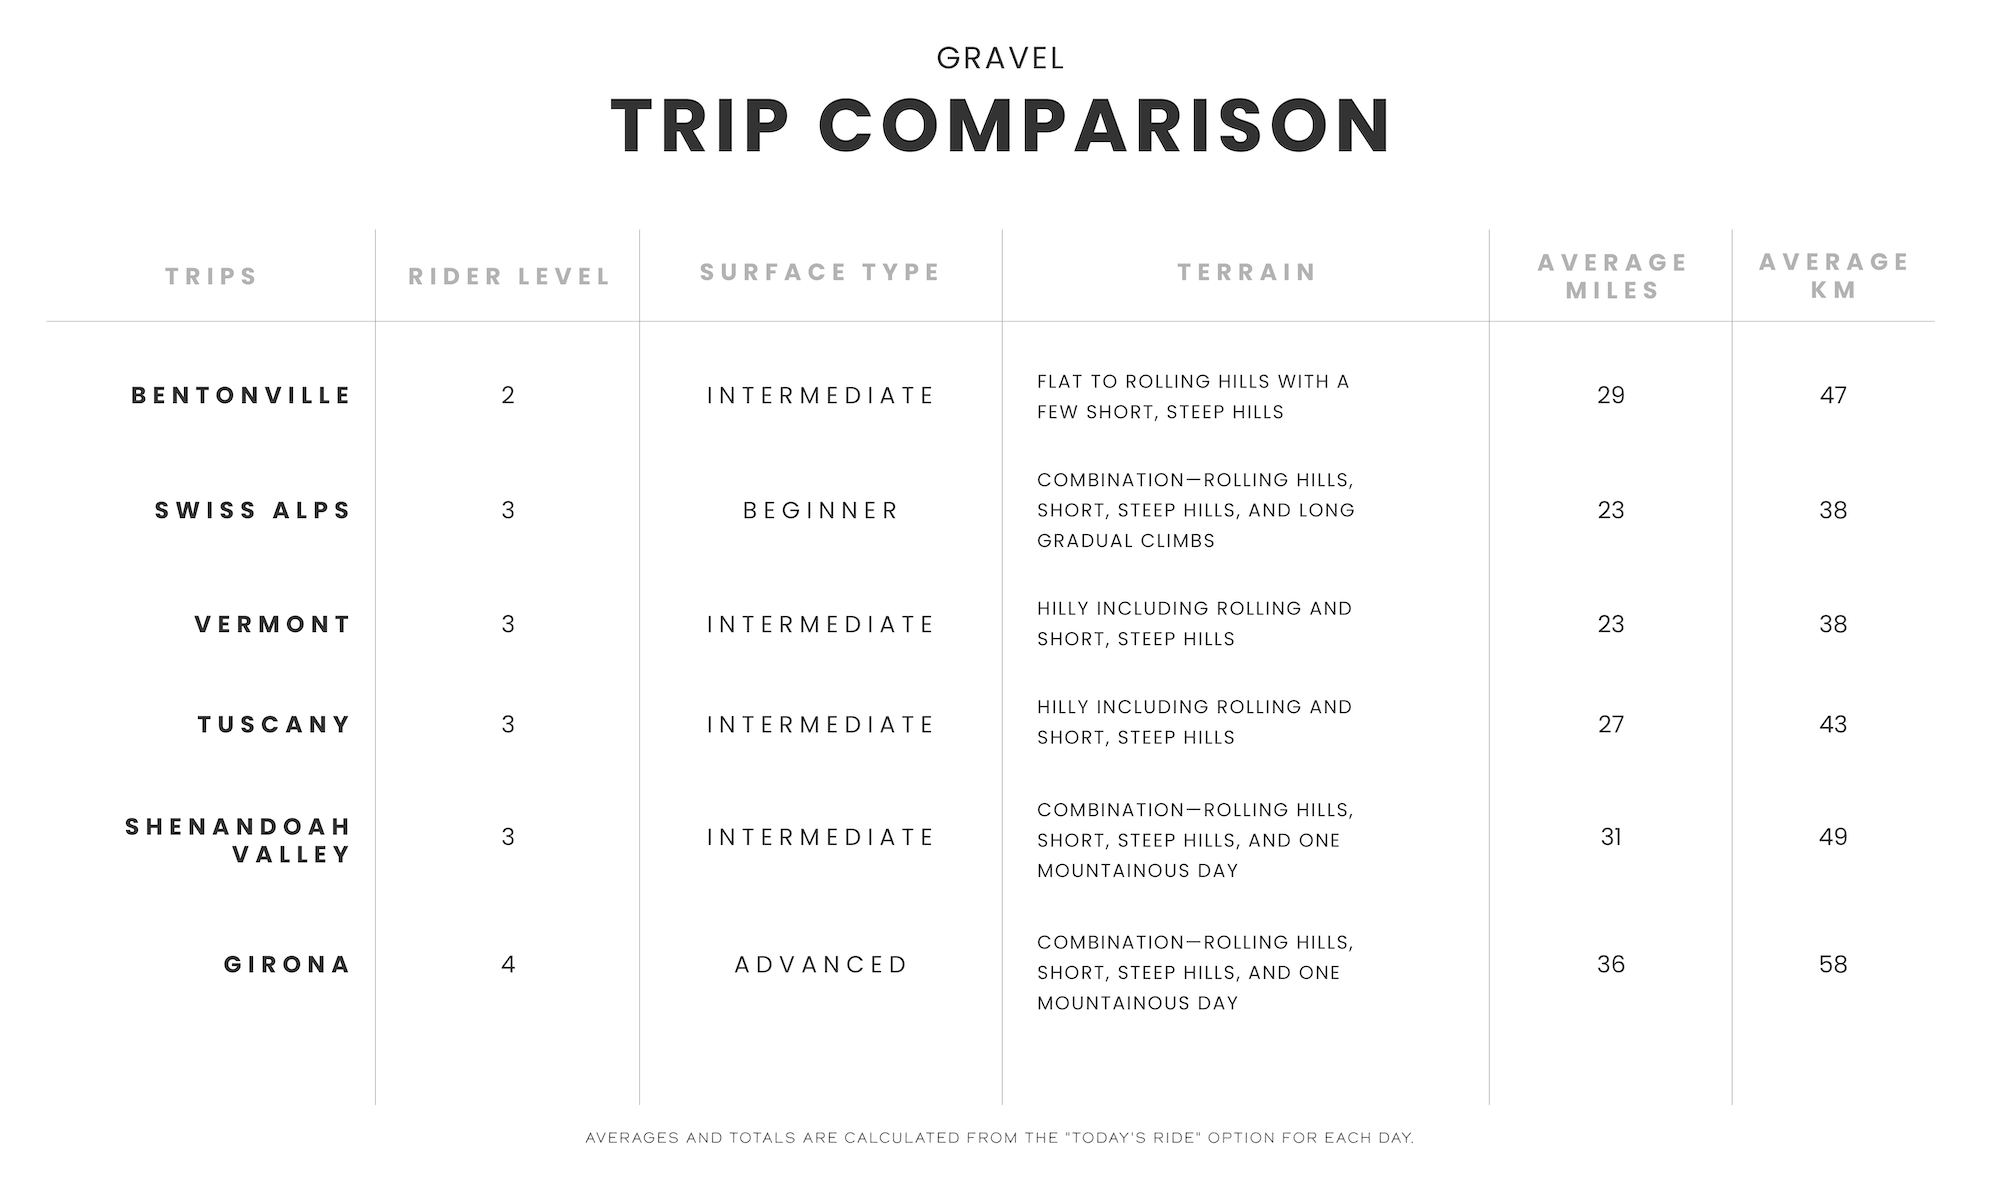 Trek Travel Gravel trips comparison chart